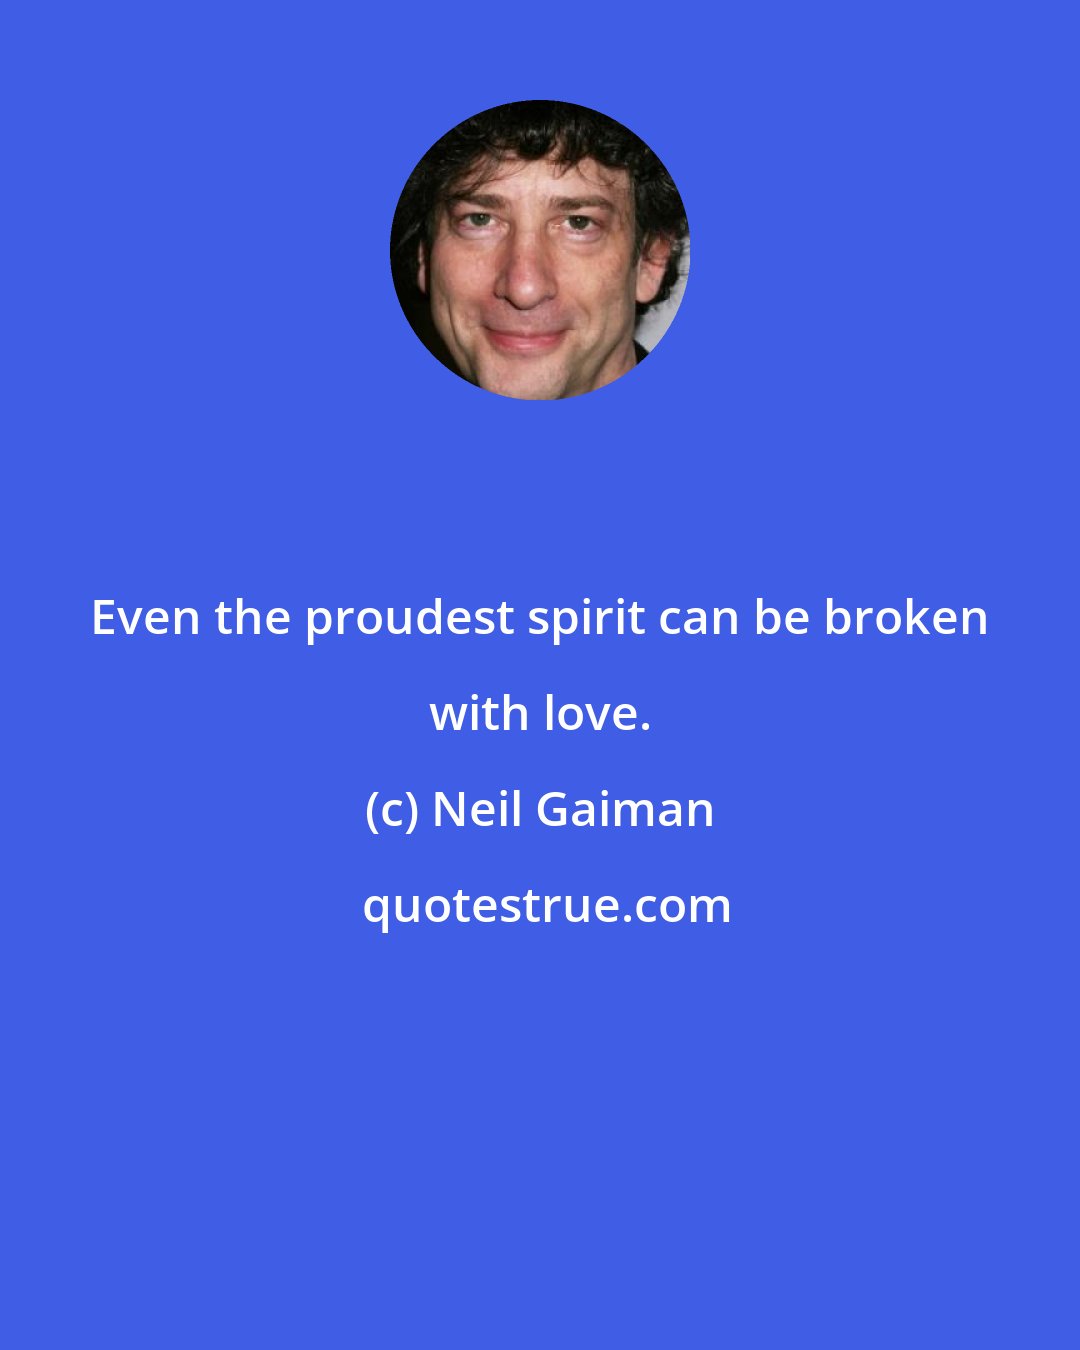 Neil Gaiman: Even the proudest spirit can be broken with love.